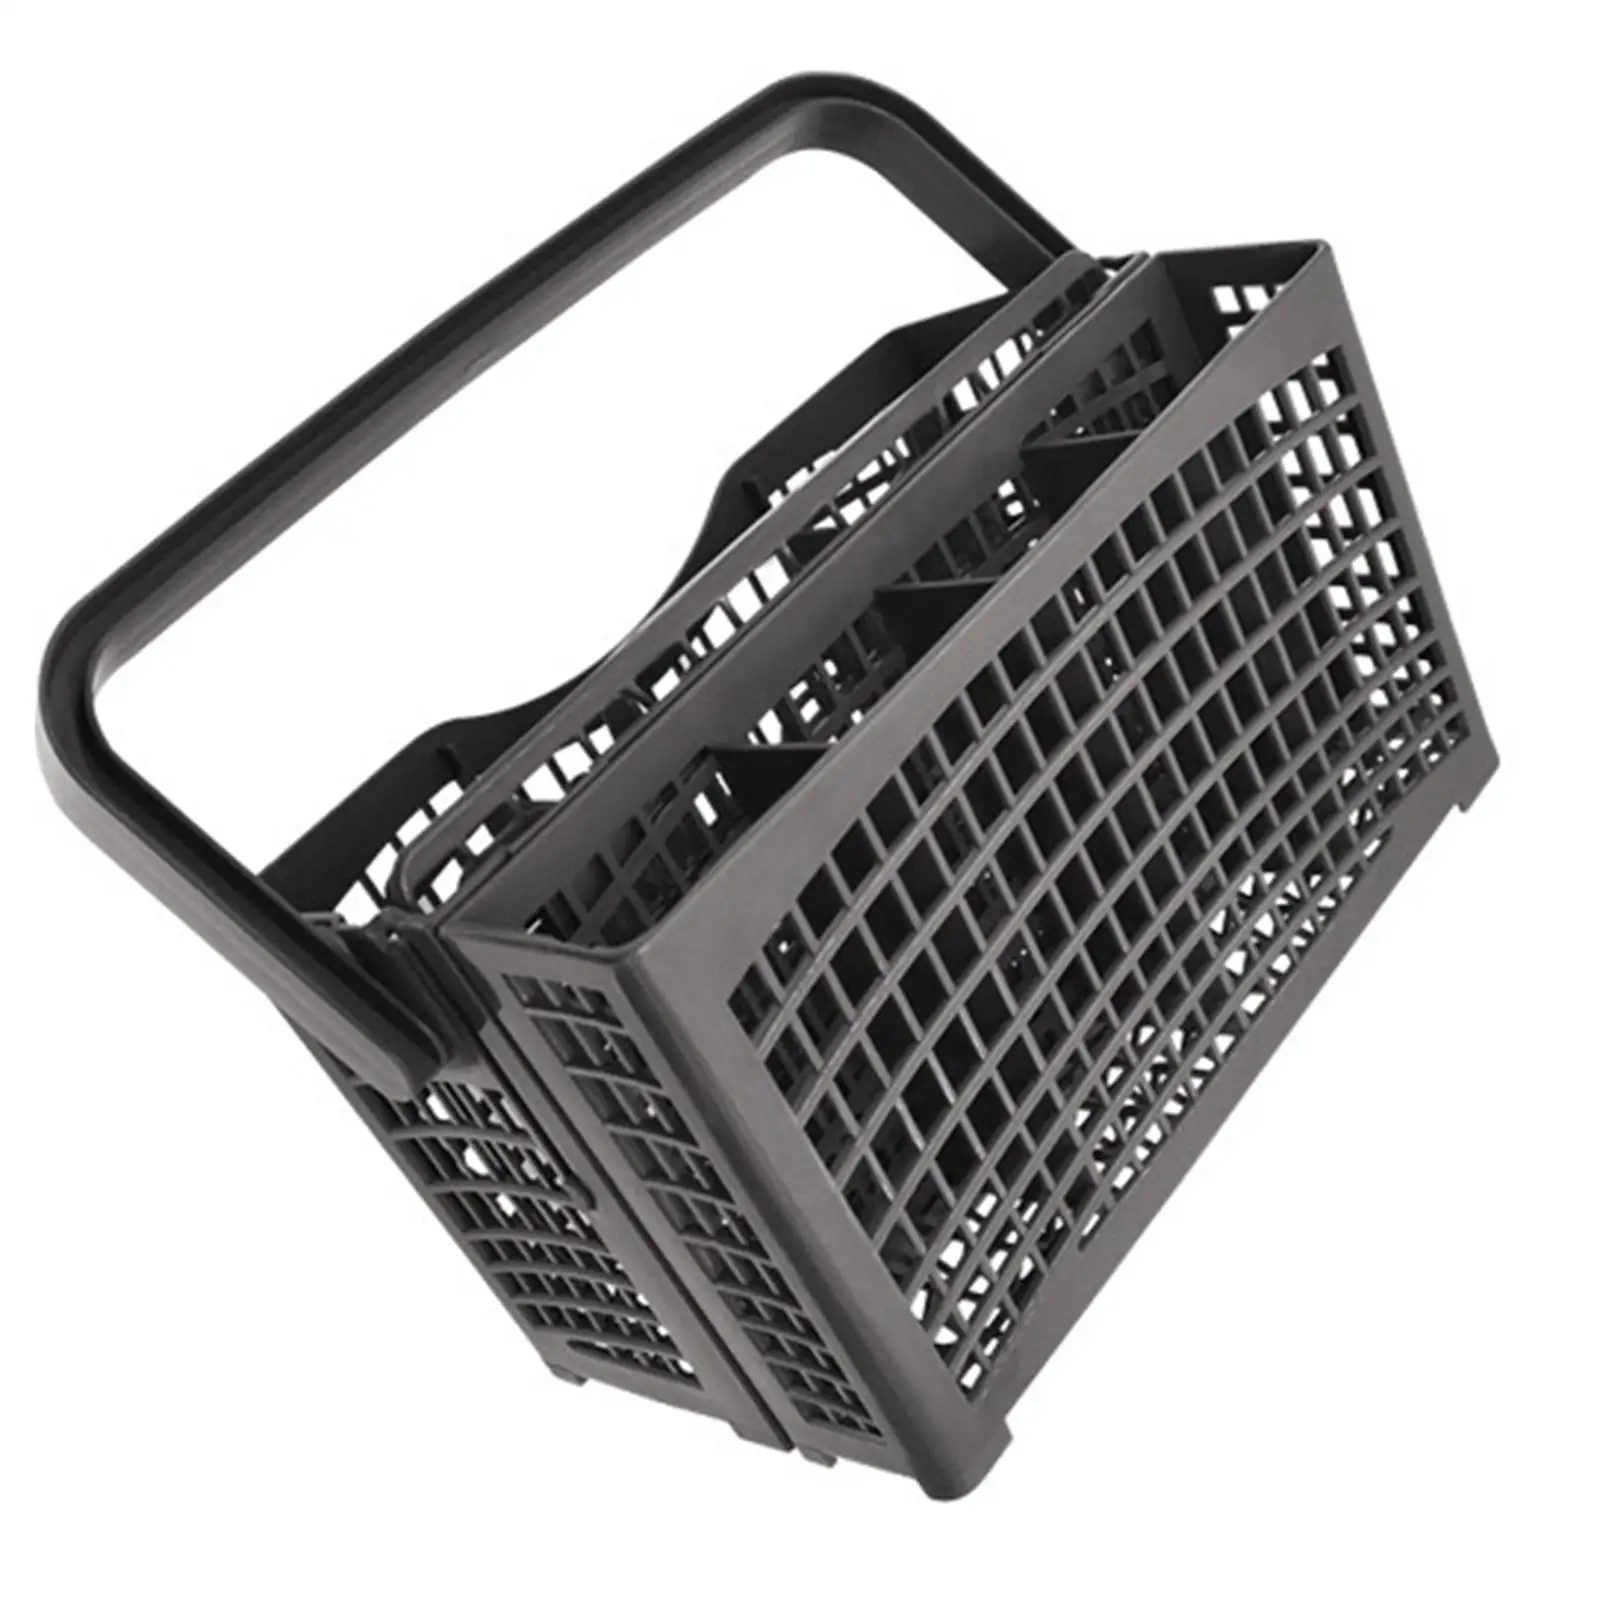 Replacement Dishwasher Silverware Basket Dishwasher Holder Storage Basket Parts Universal for Spoon Silverware Fork Flatware